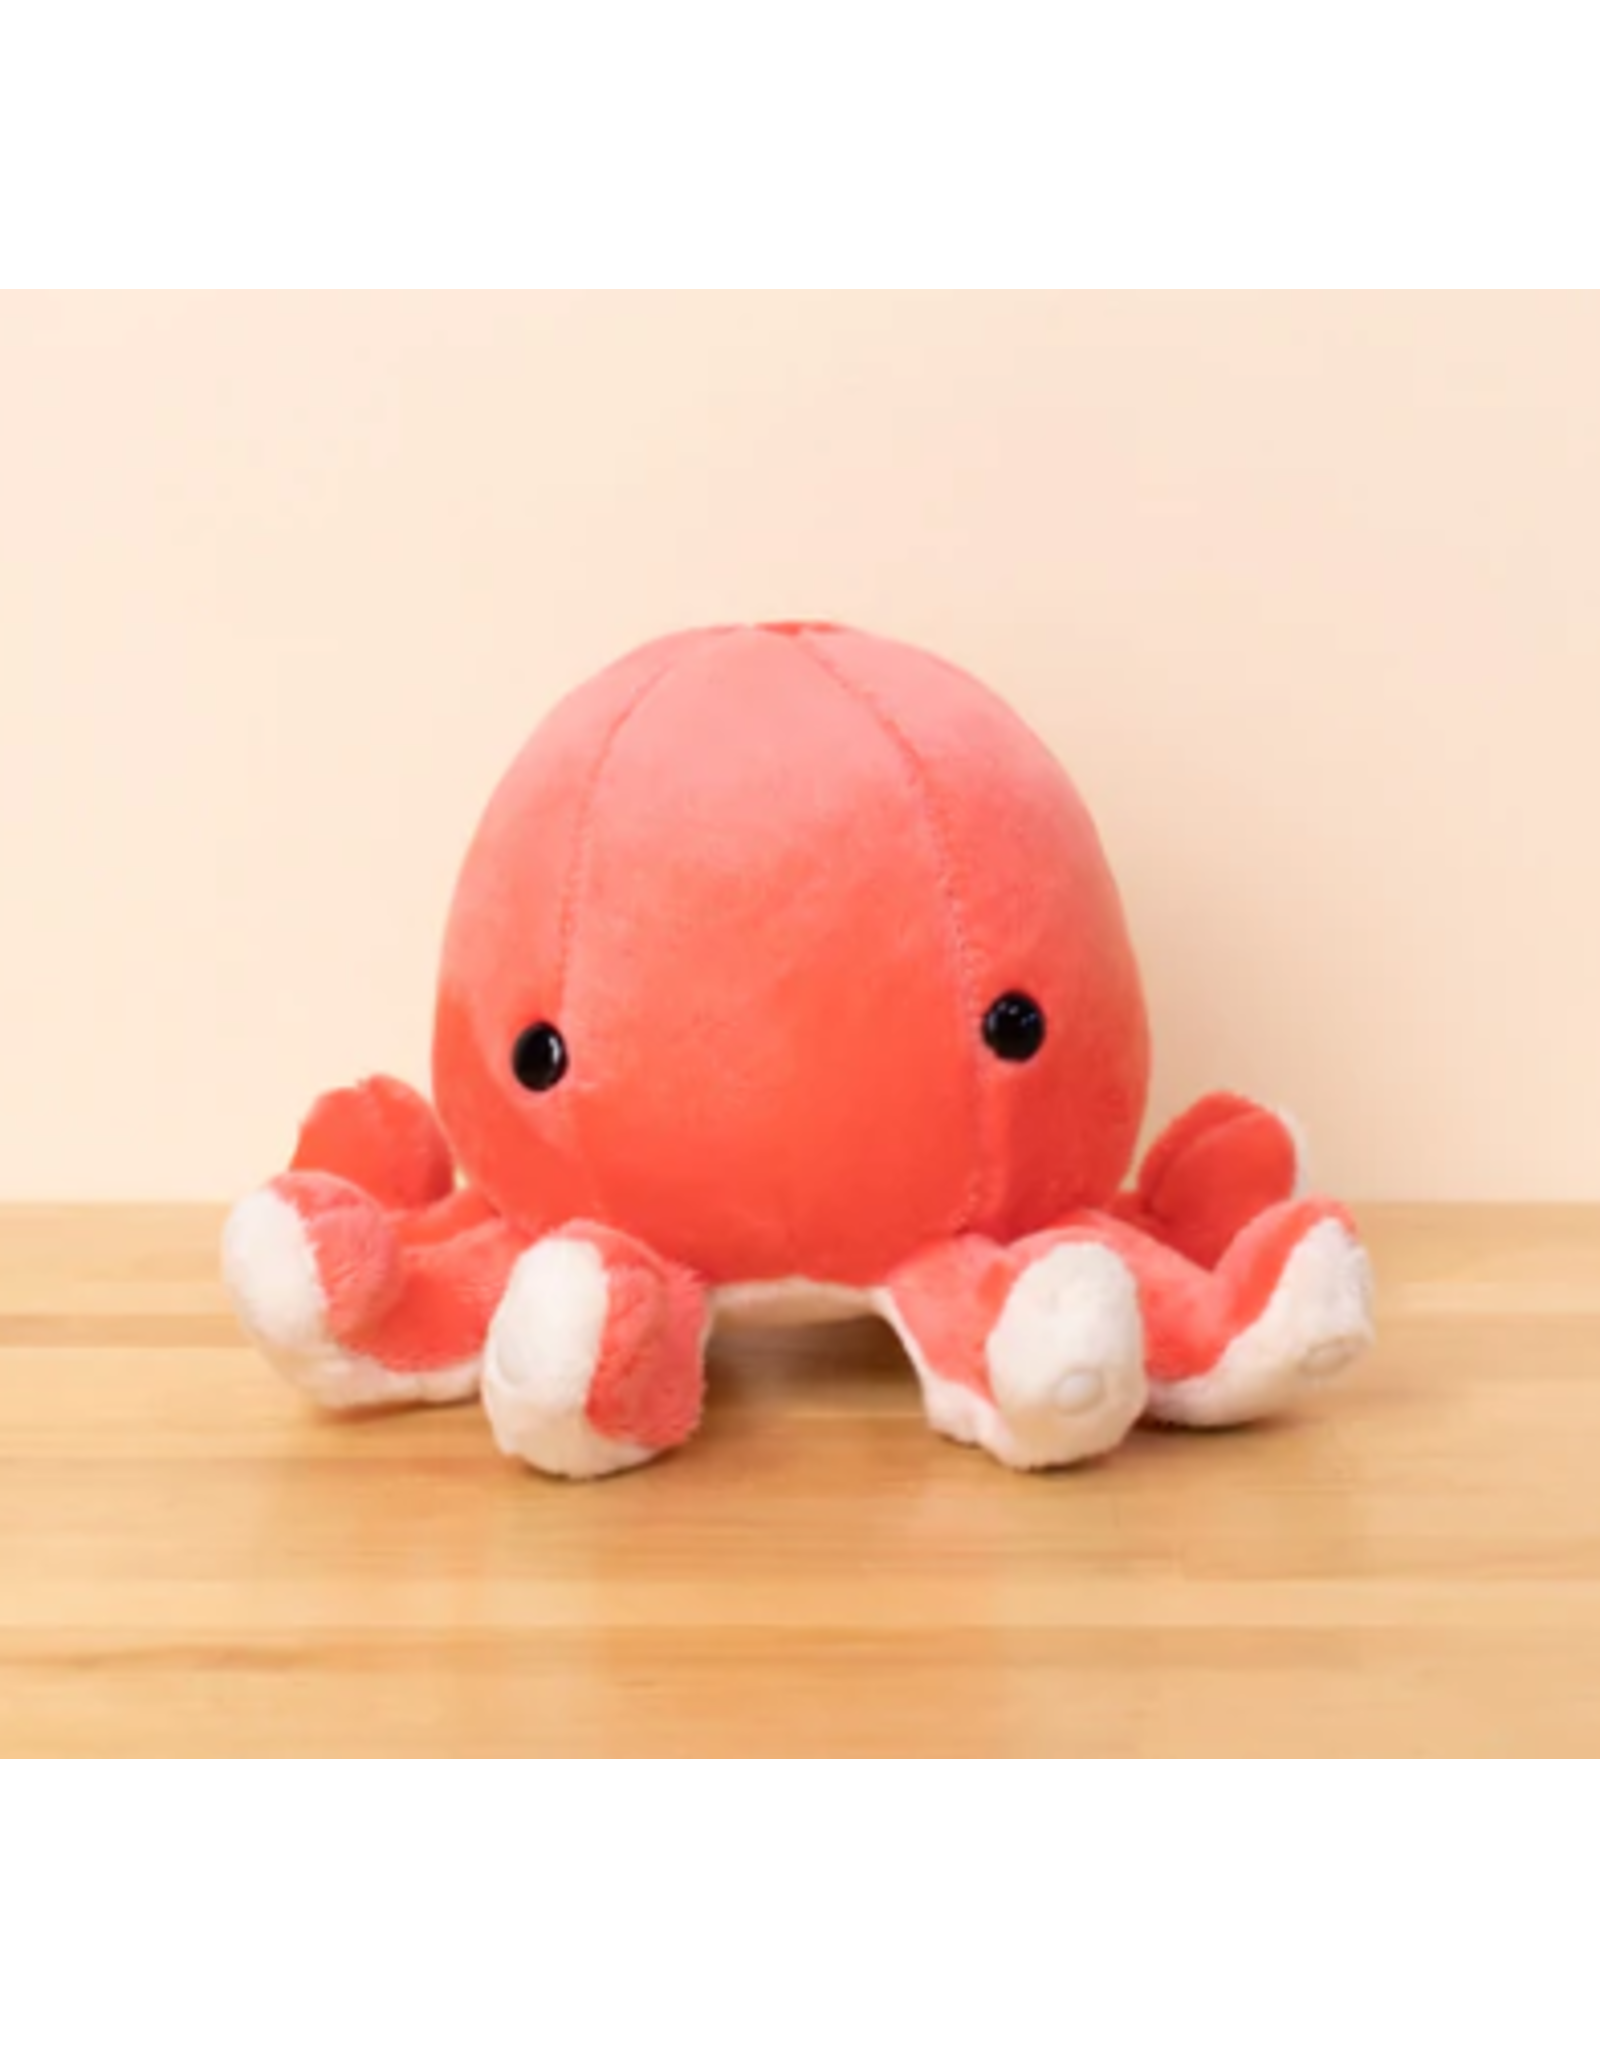 Octi the Octopus Mini